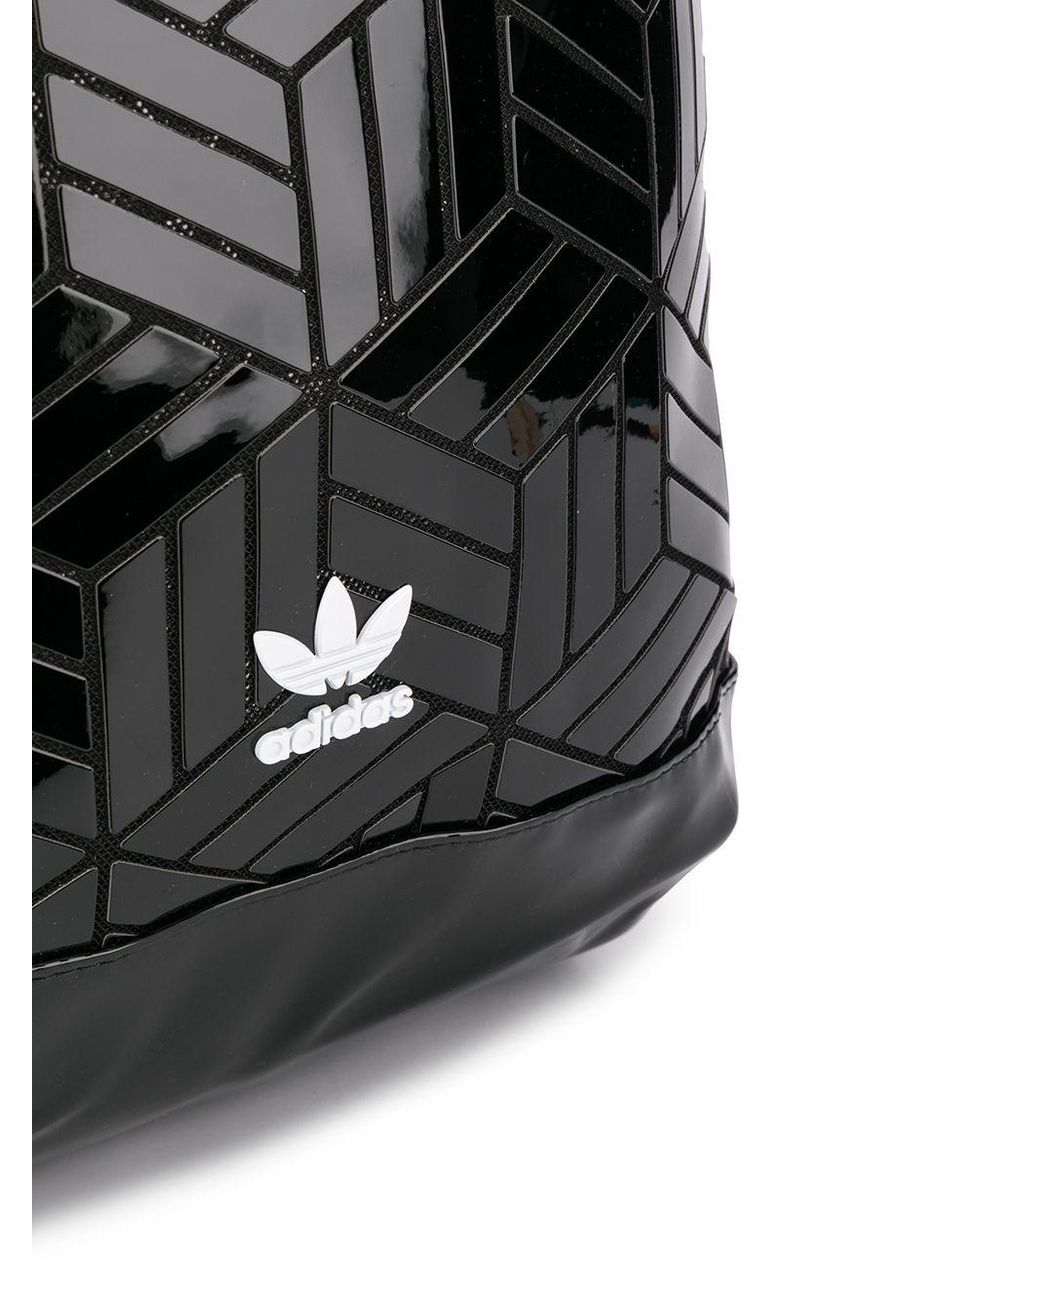 adidas Originals Roll Top 3d Backpack in Black | Lyst Canada